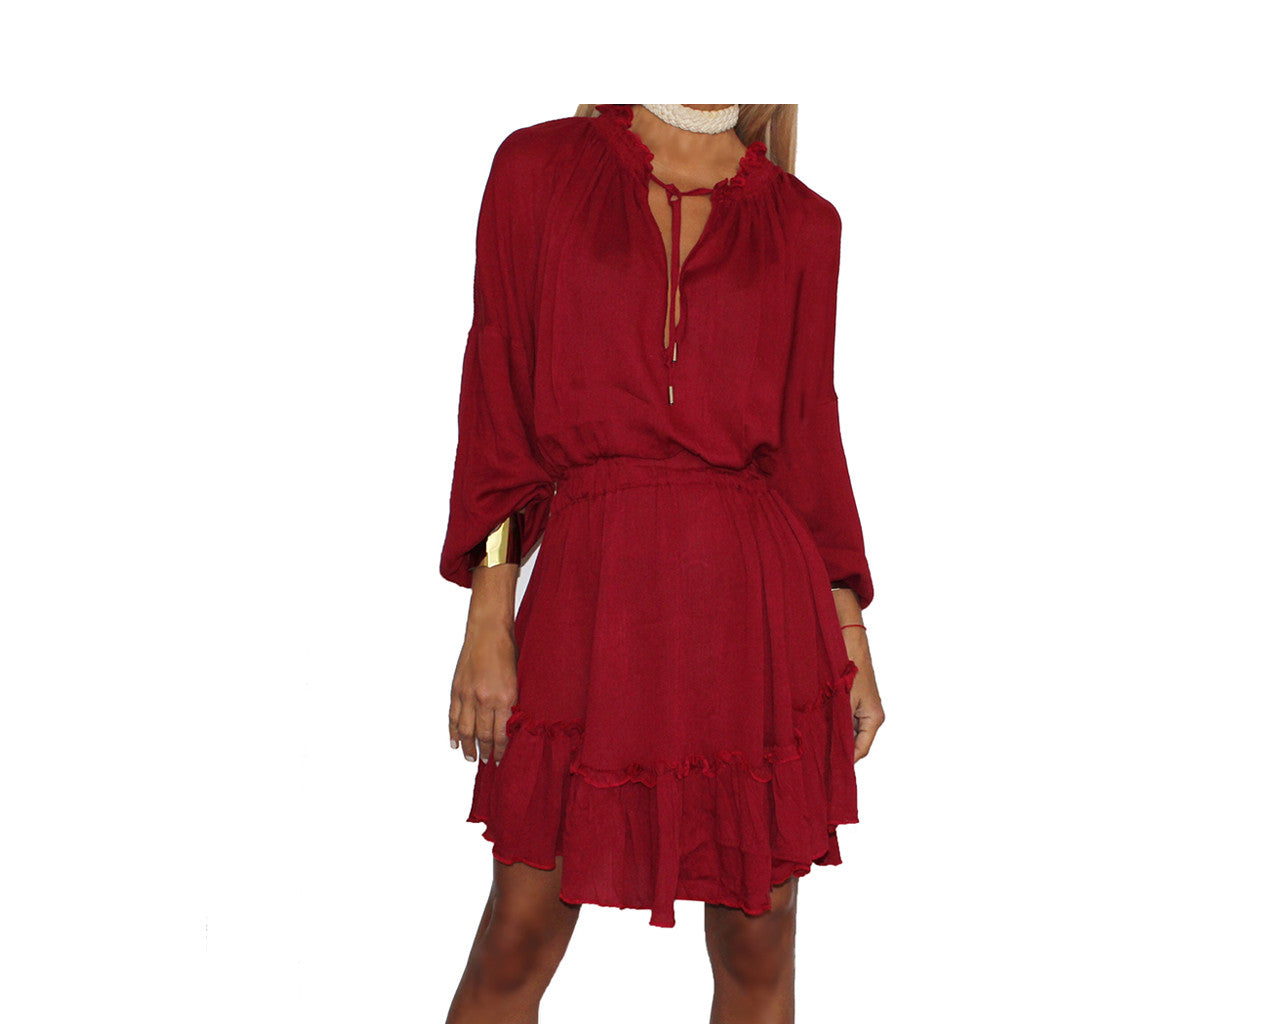 Red flowy short dress - The Capri – Regine Chevallier